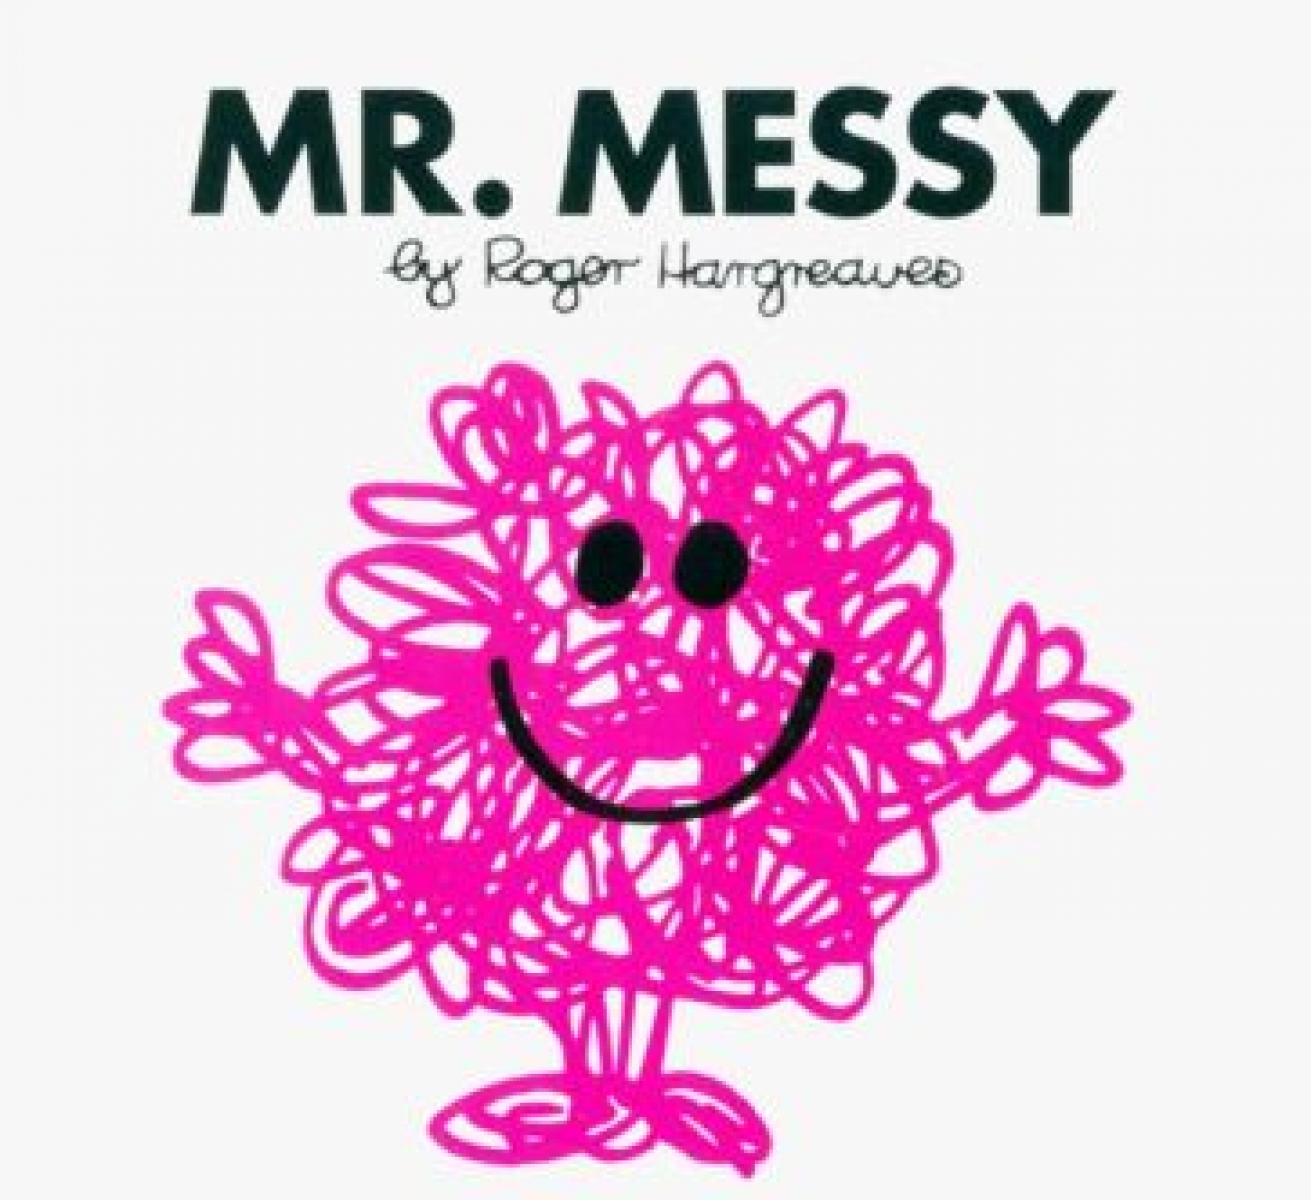 Hargreaves Roger Mr. Messy 